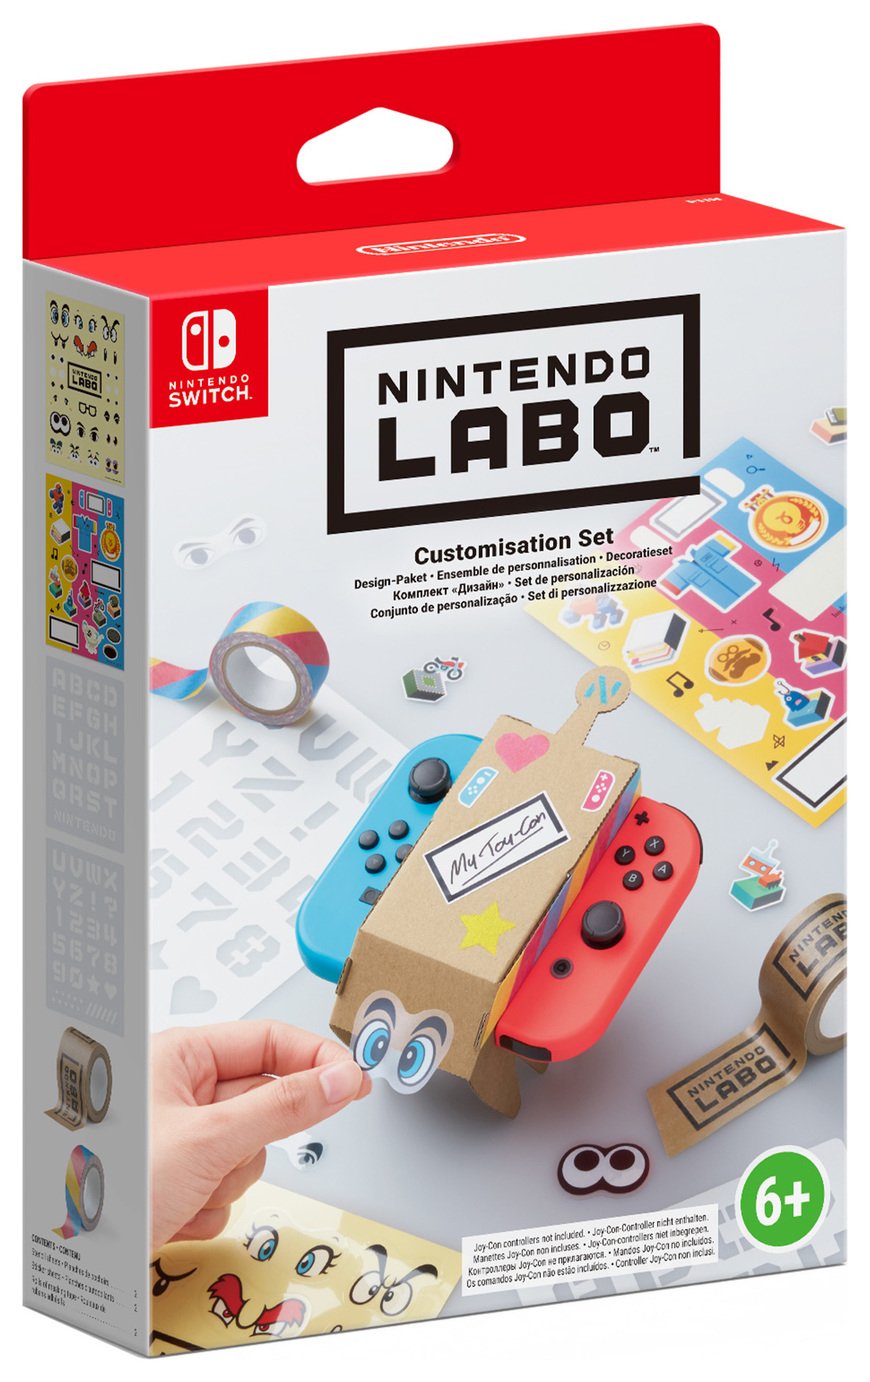 Nintendo Labo Customisation Set Review